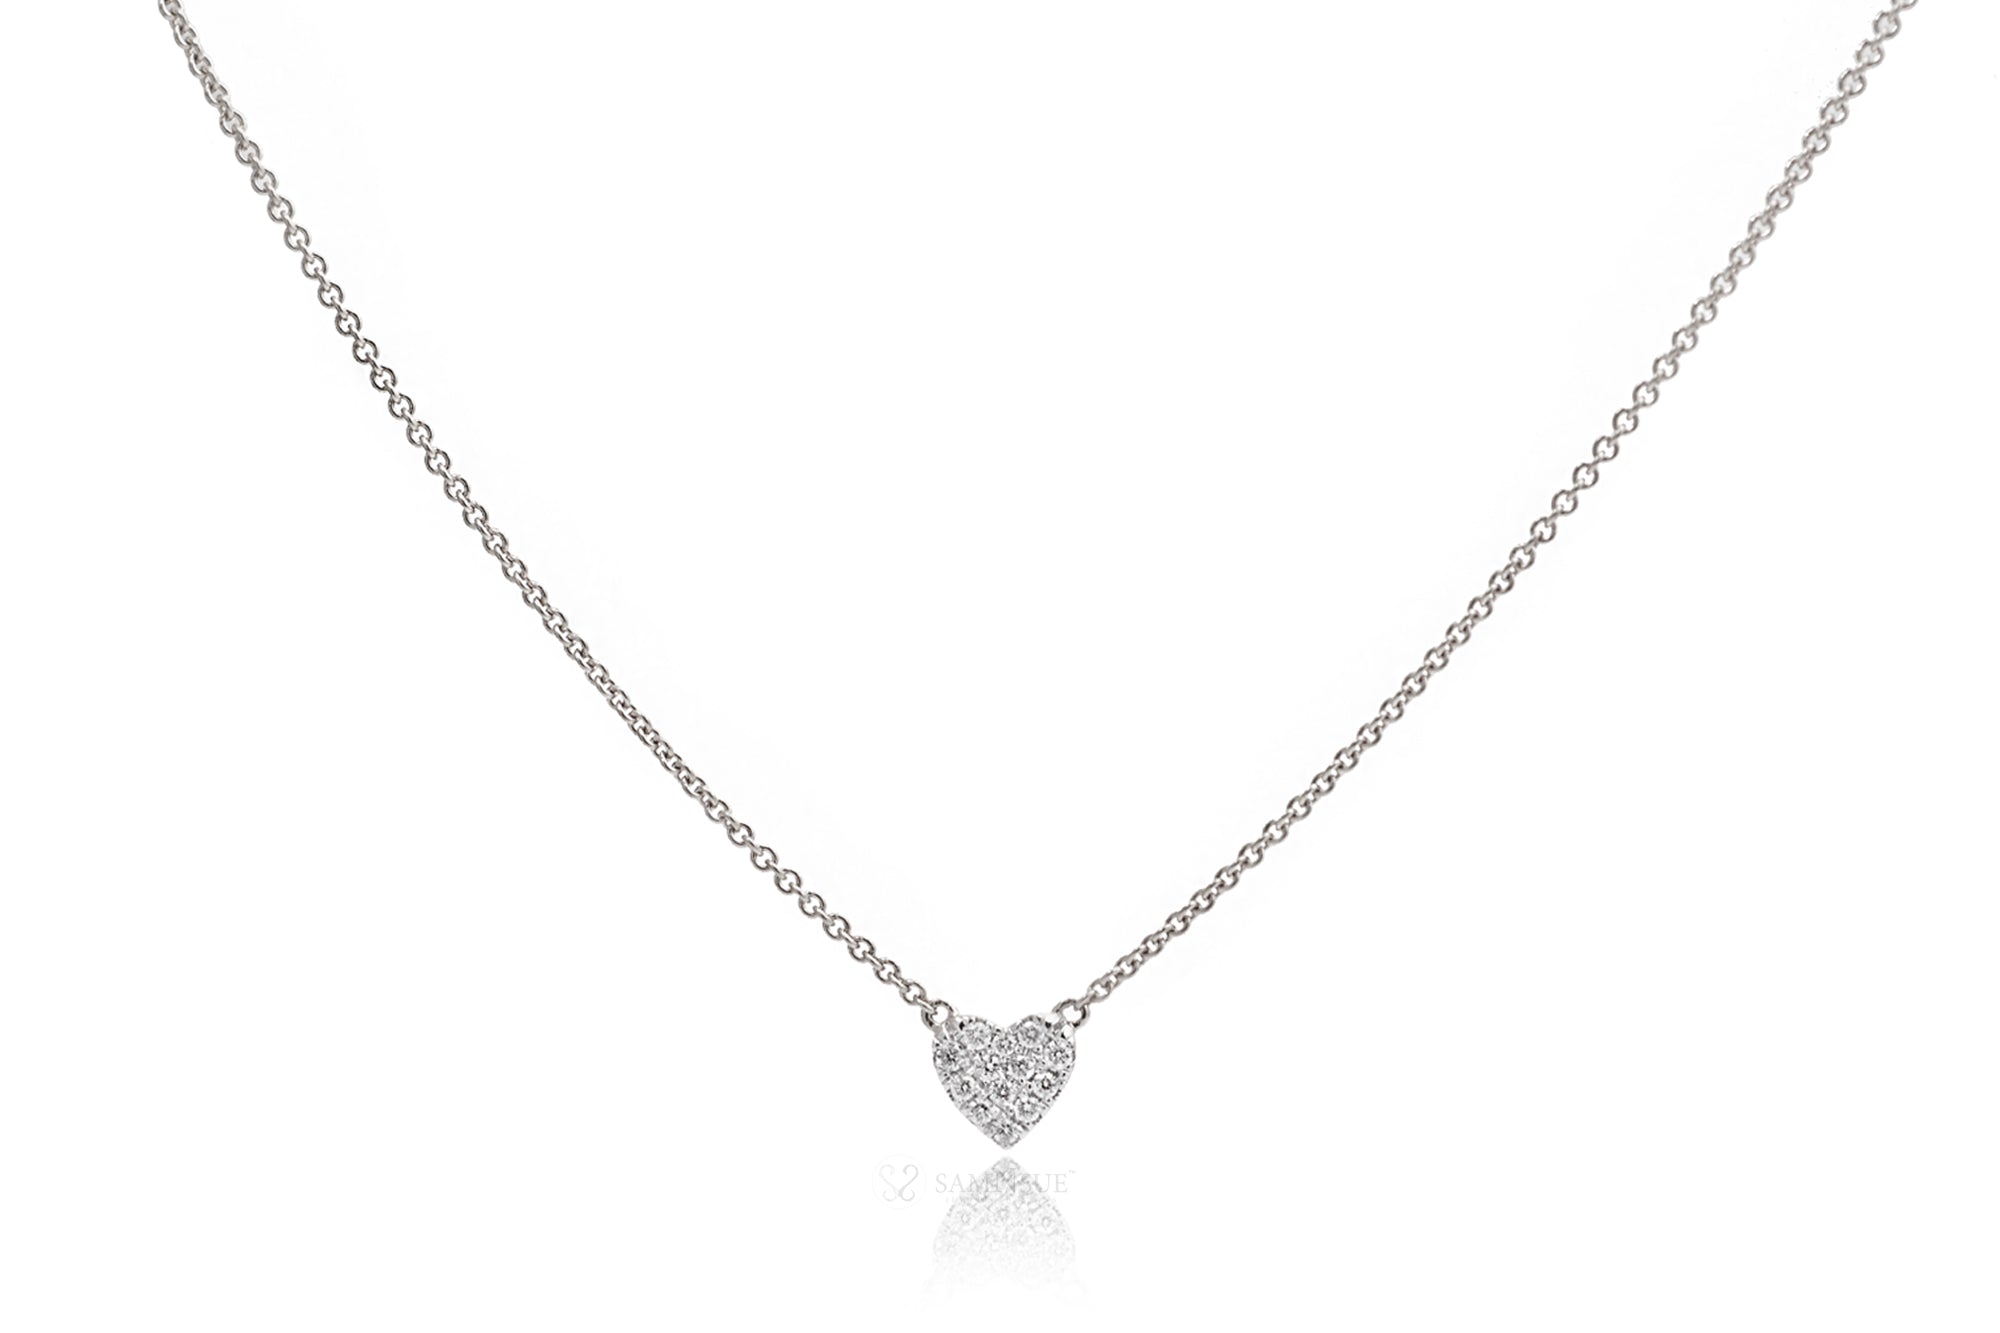 The Diamond Heart Pavé Plate Necklace